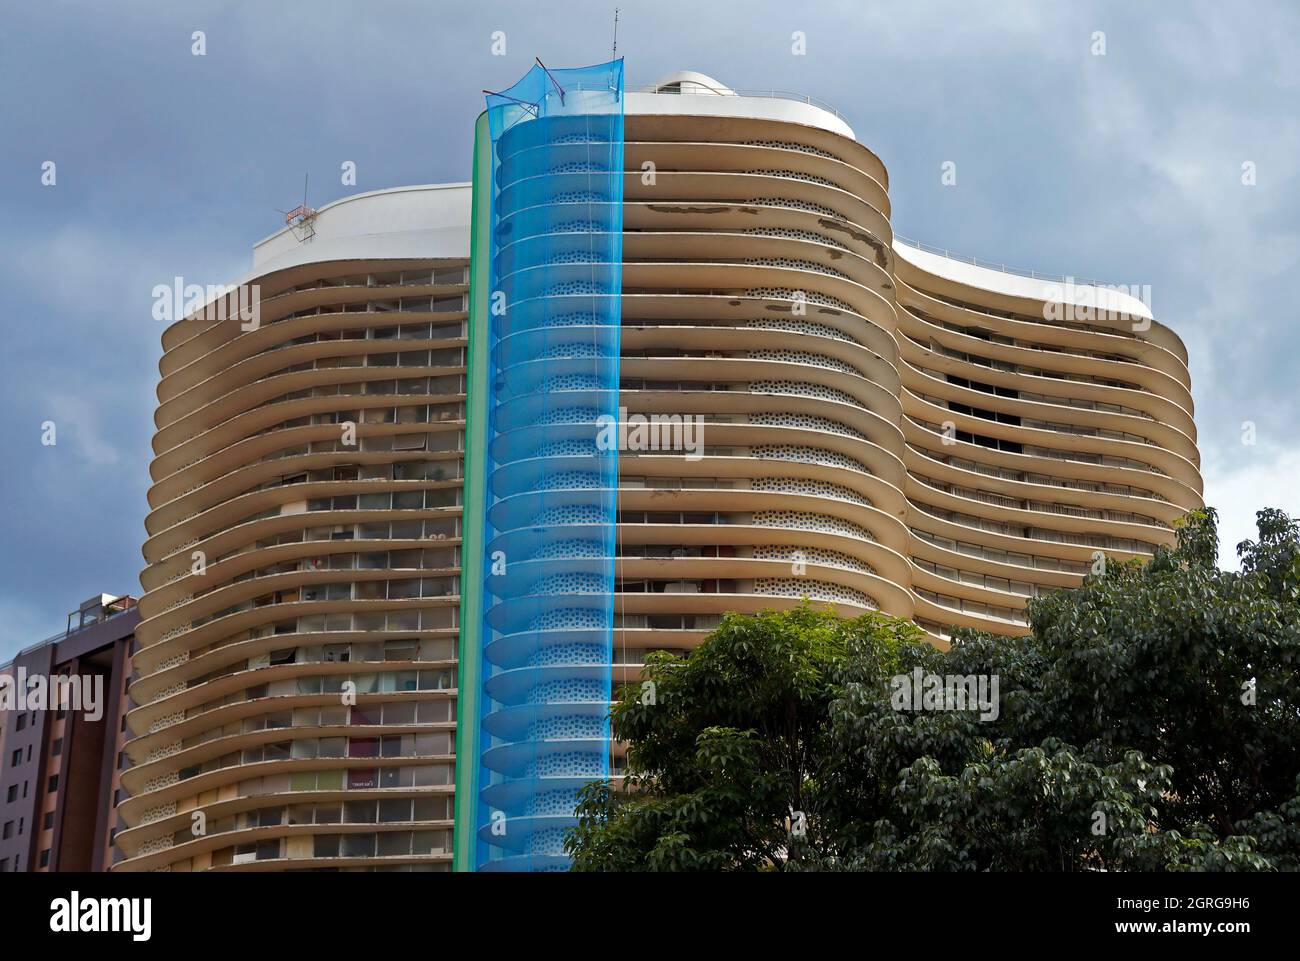 BELO HORIZONTE, MINAS GERAIS, BRAZIL - JANUARY 16, 2018: Niemeyer Building, architectural landmark located in Liberty Square (Praça da Liberdade) Stock Photo